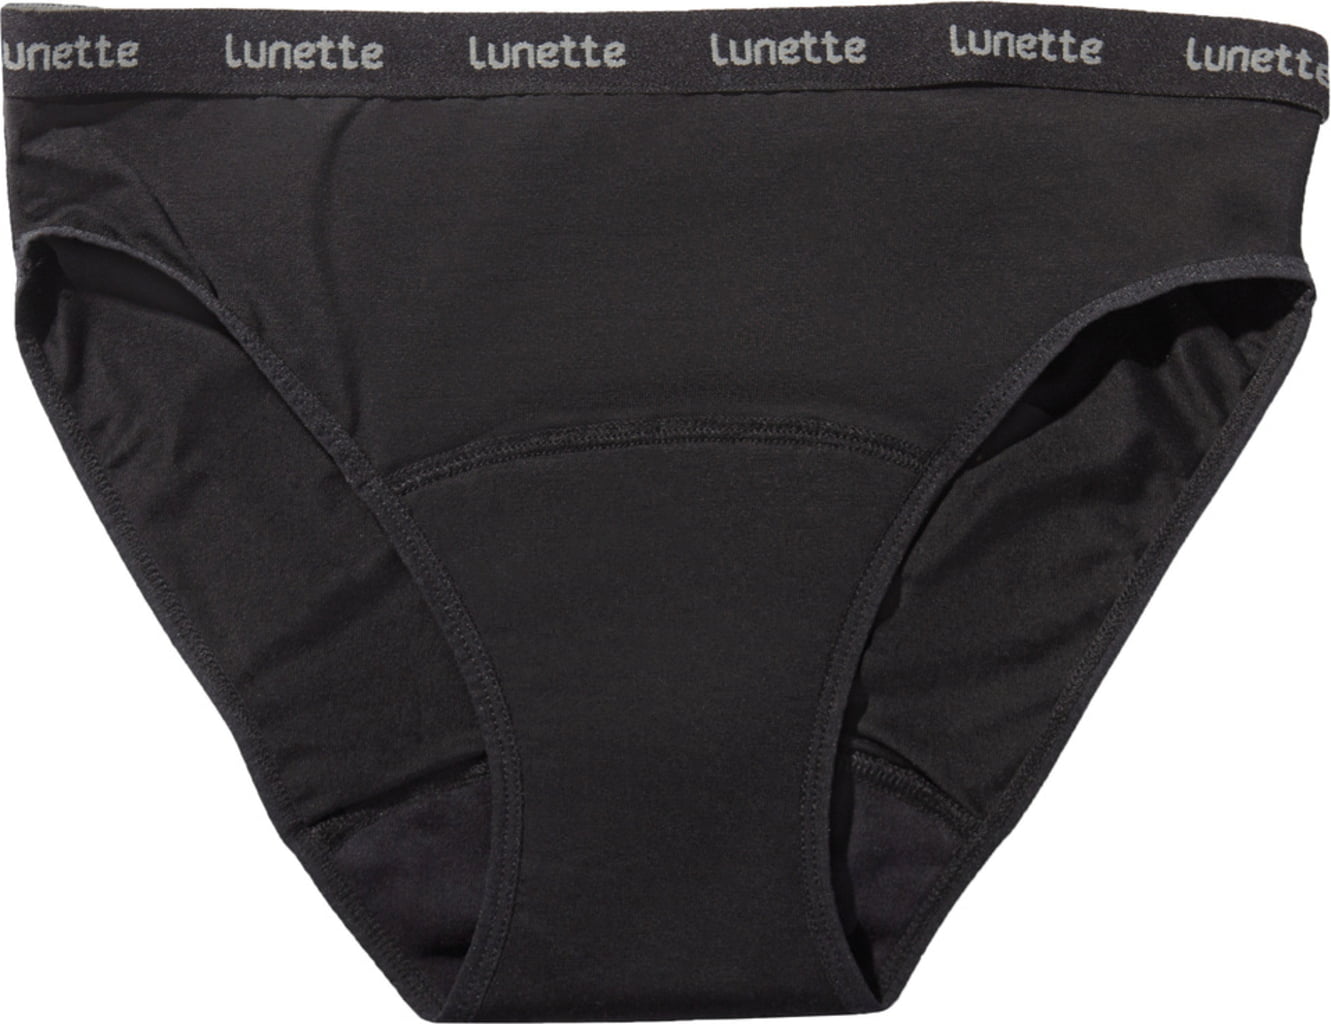 https://ec.nice-cdn.com/upload/image/product/large/default/lunette-period-panty-period-underwear-black-xs-2109515-en.jpg